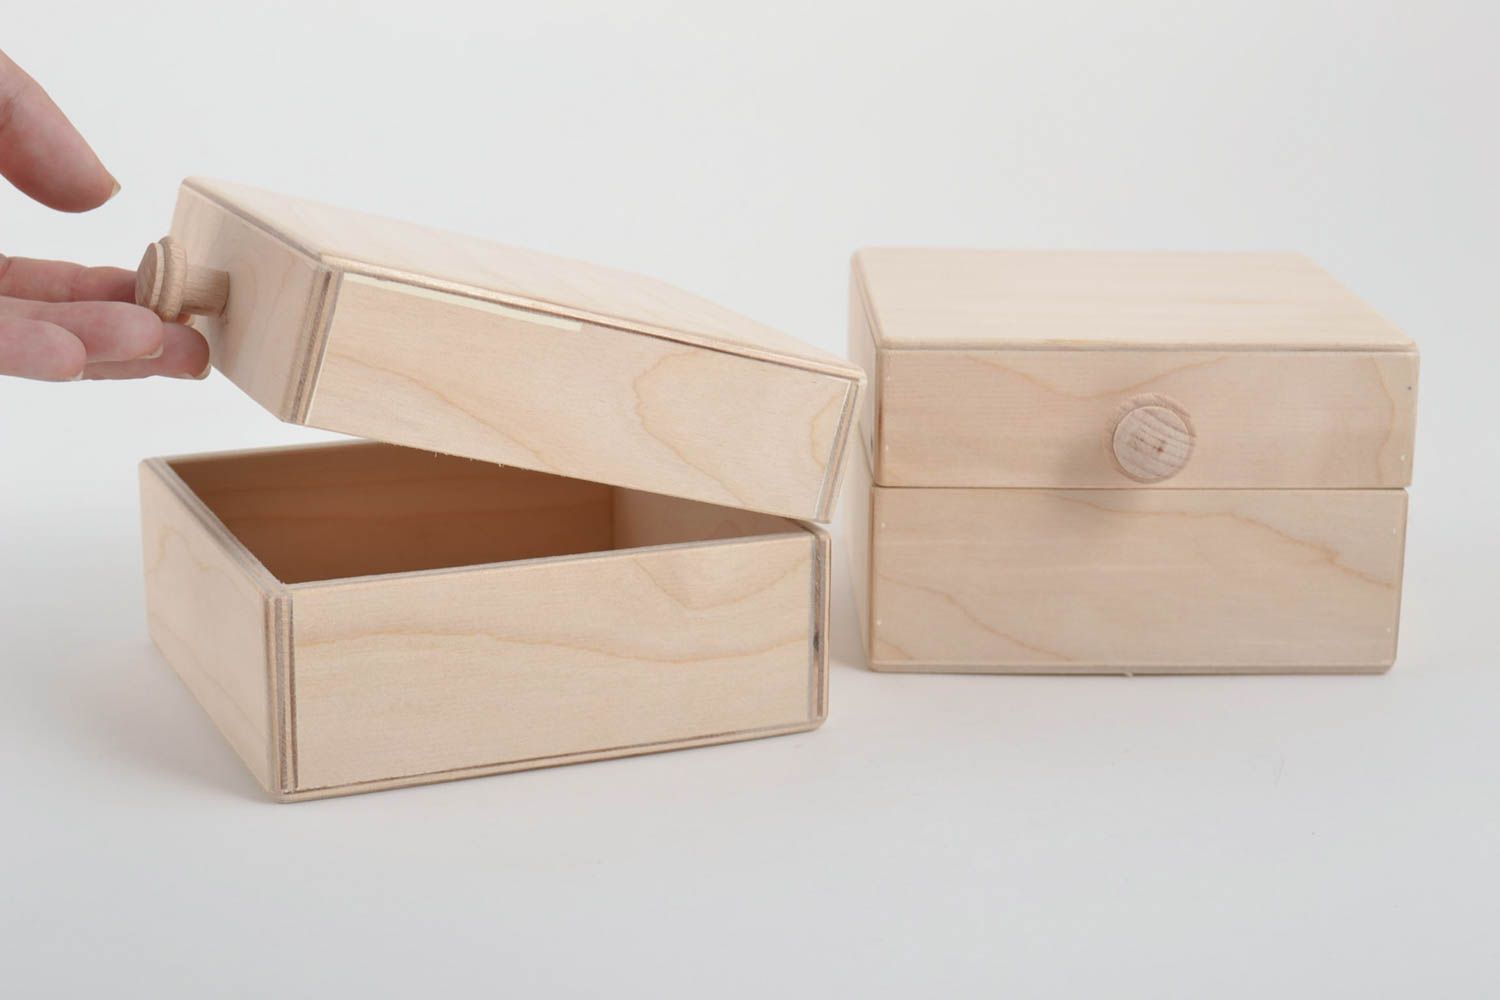 Set of 2 handmade wooden blank boxes wooden craft art supplies gift ideas photo 5